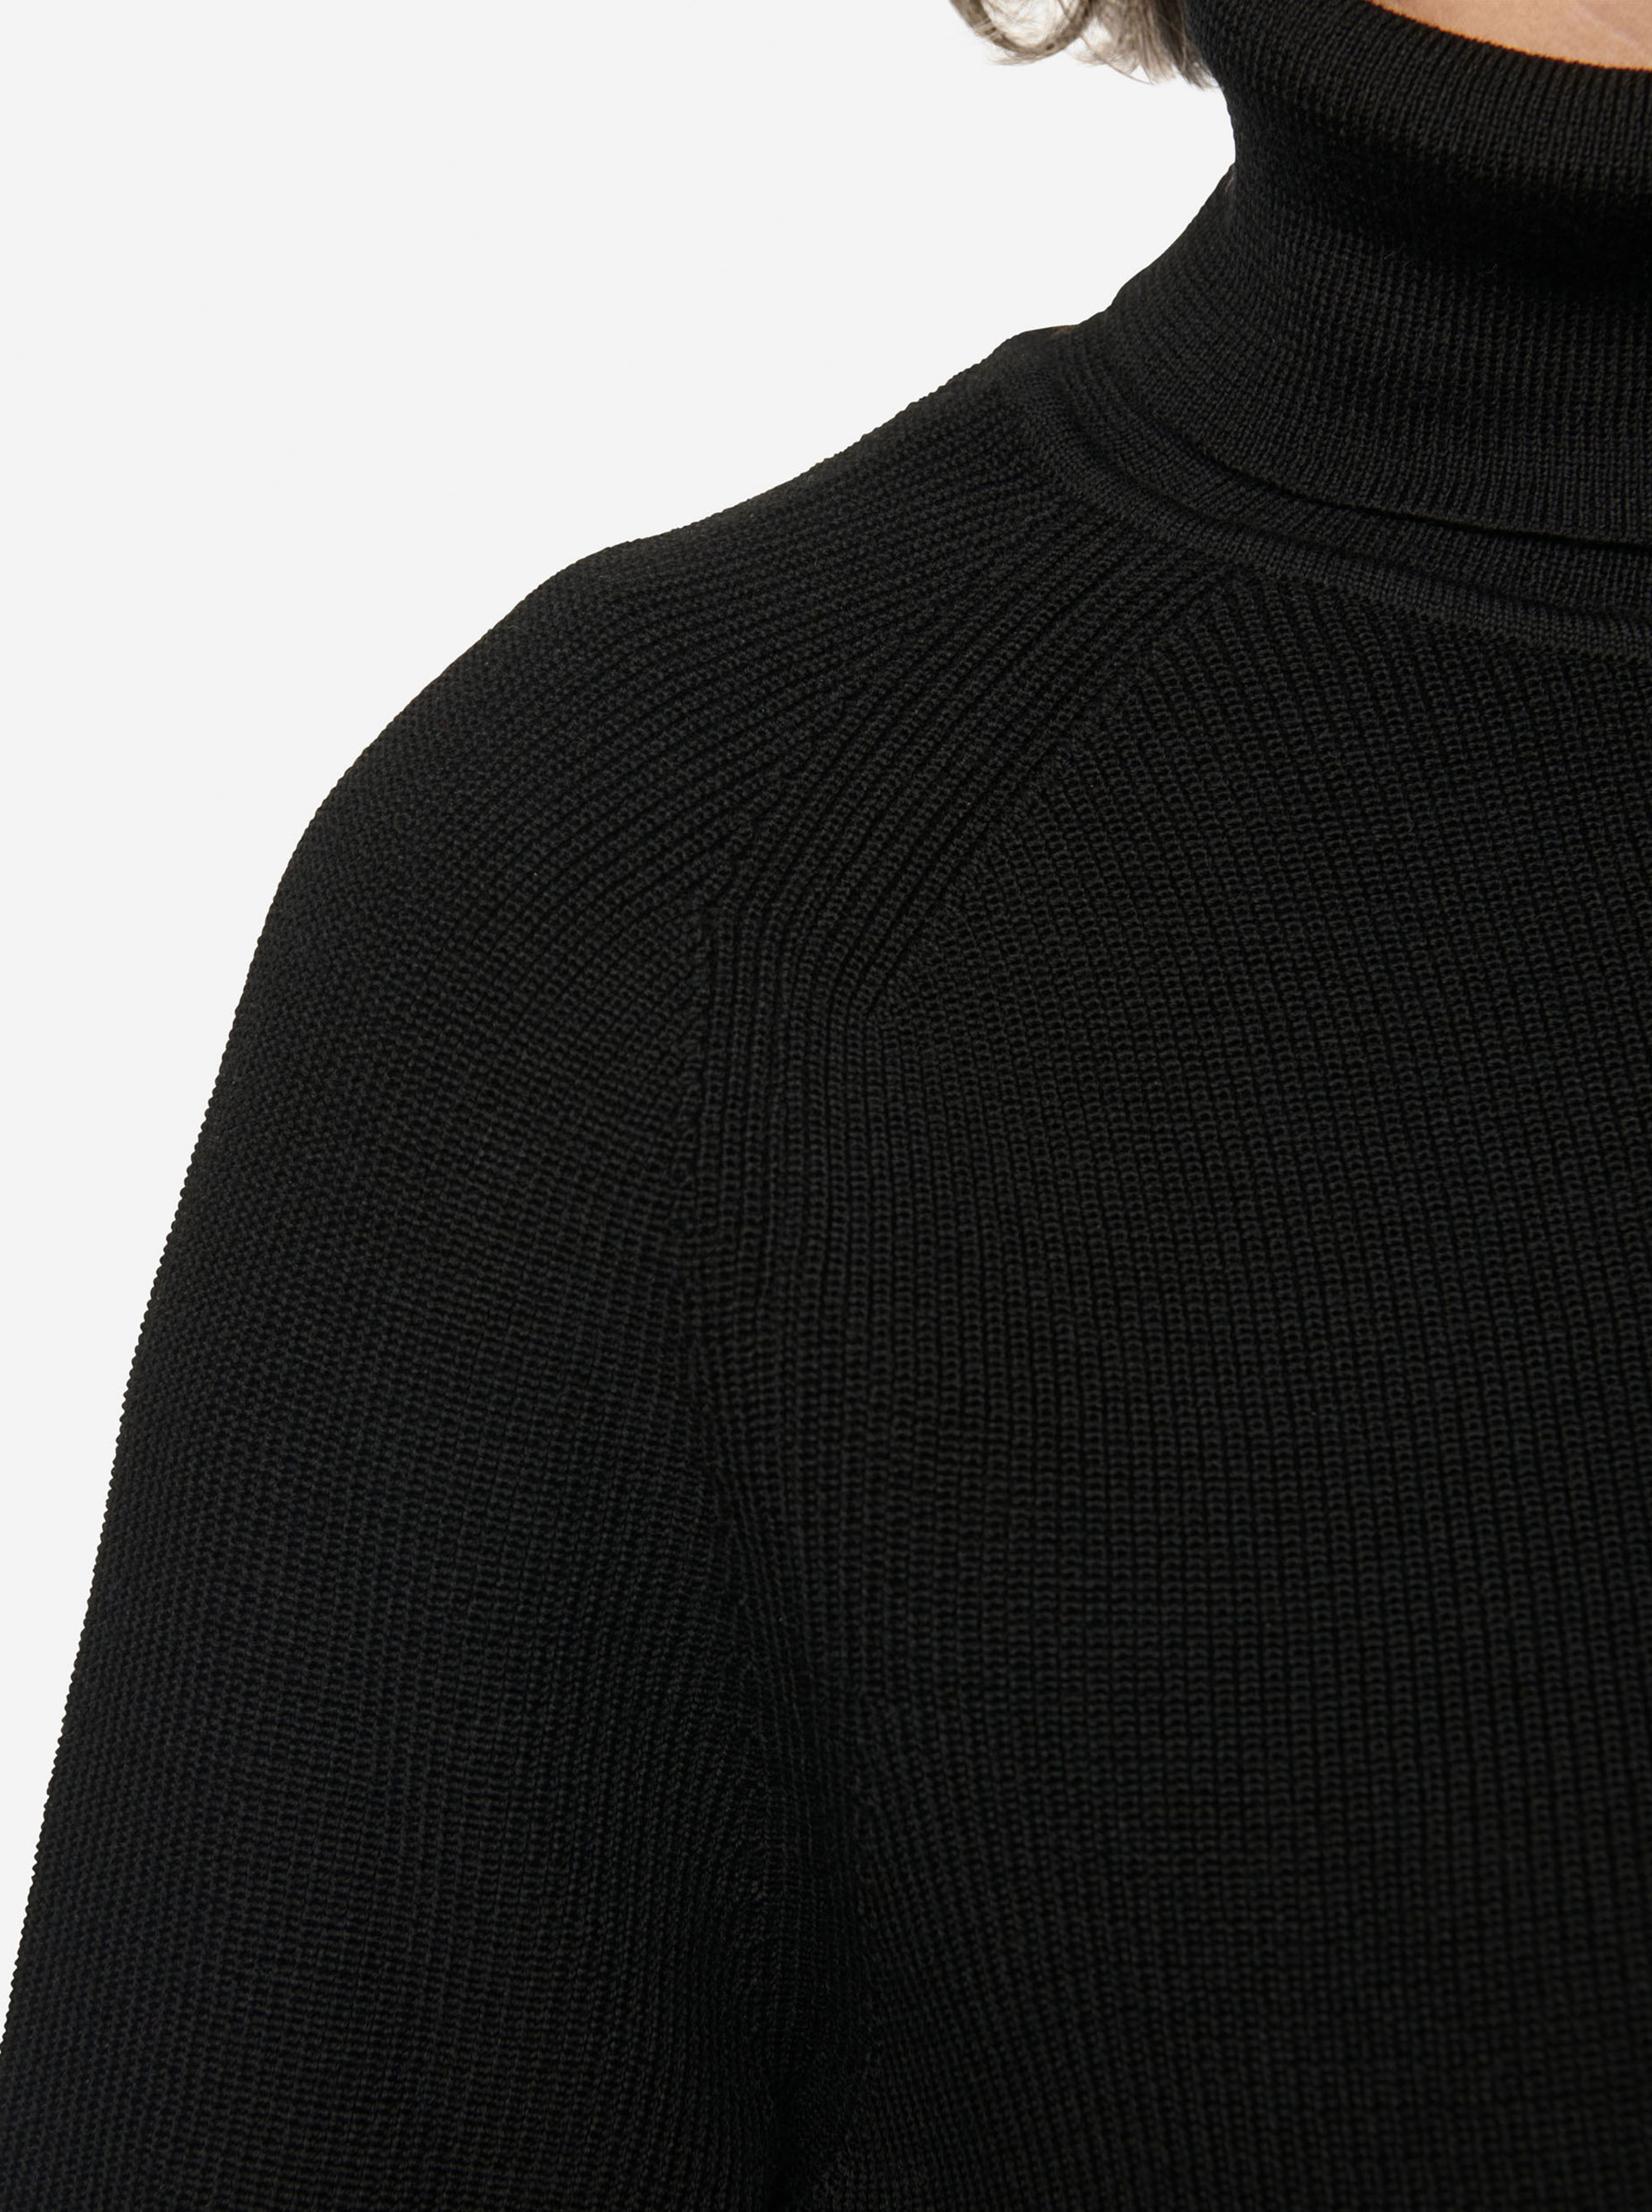 Teym - Turtleneck - The Merino Sweater - Women - Black - 7